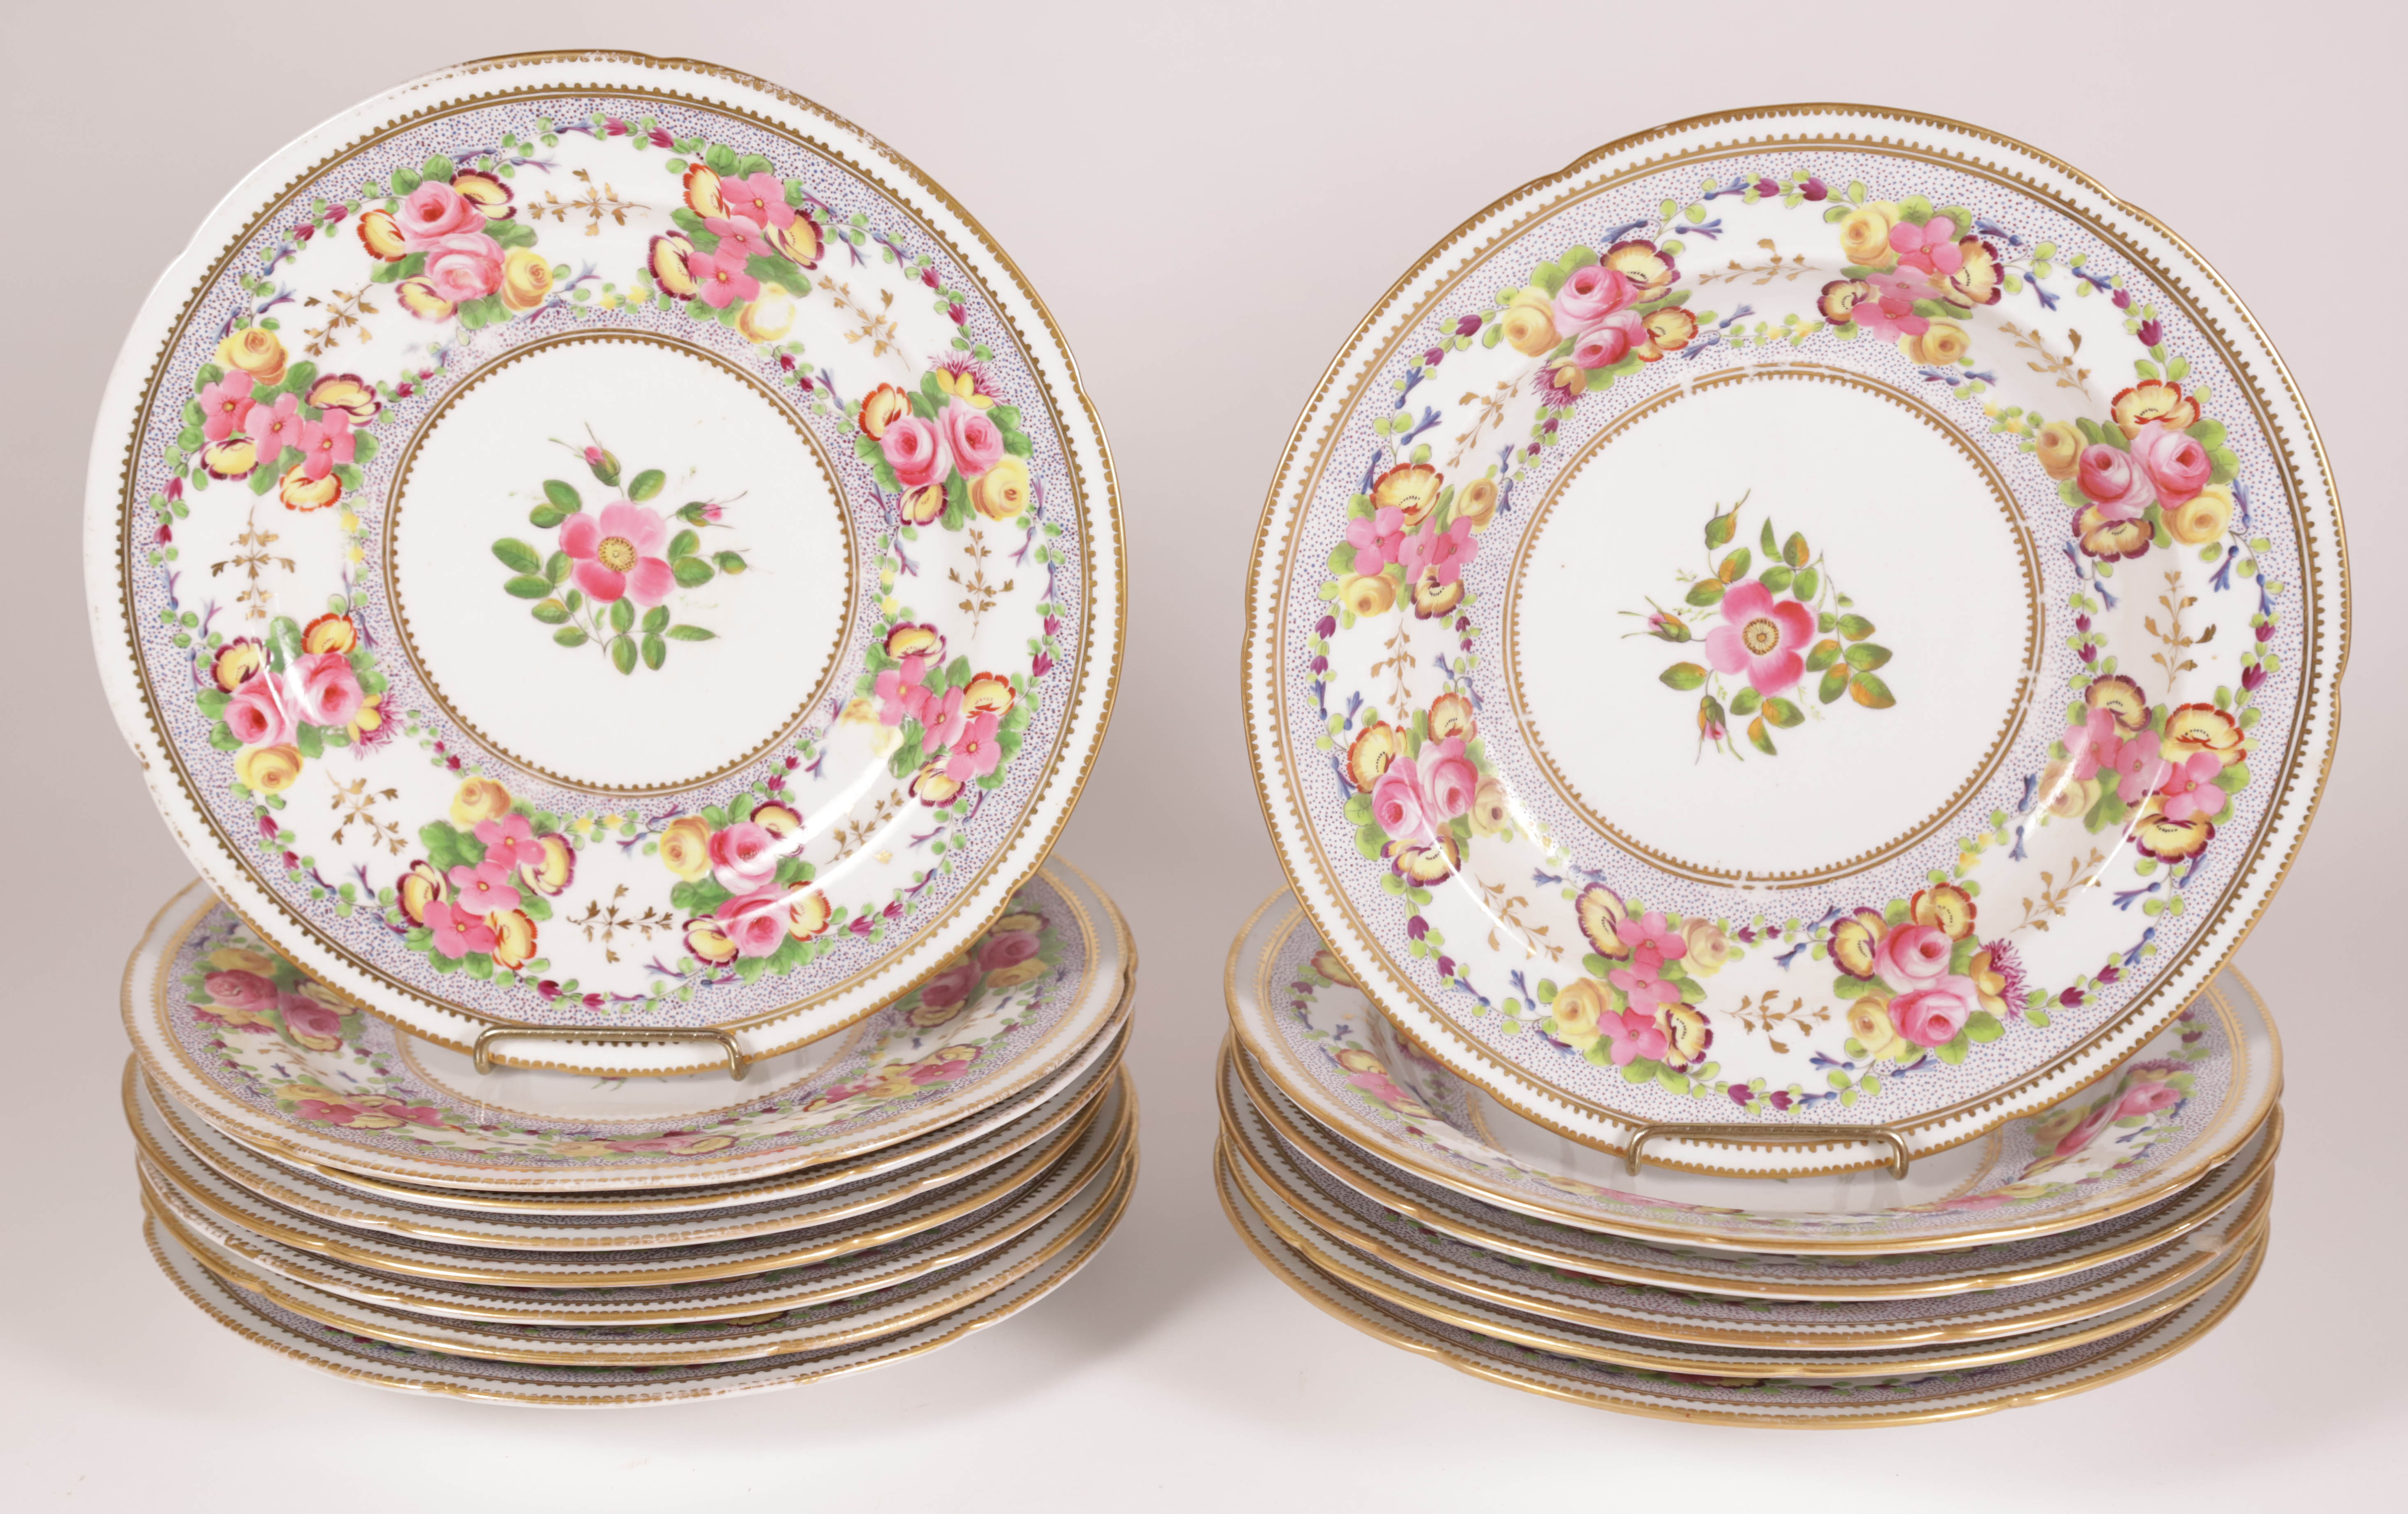 Set of 14 Old Paris Porcelain Dinner Plates, 19th Century